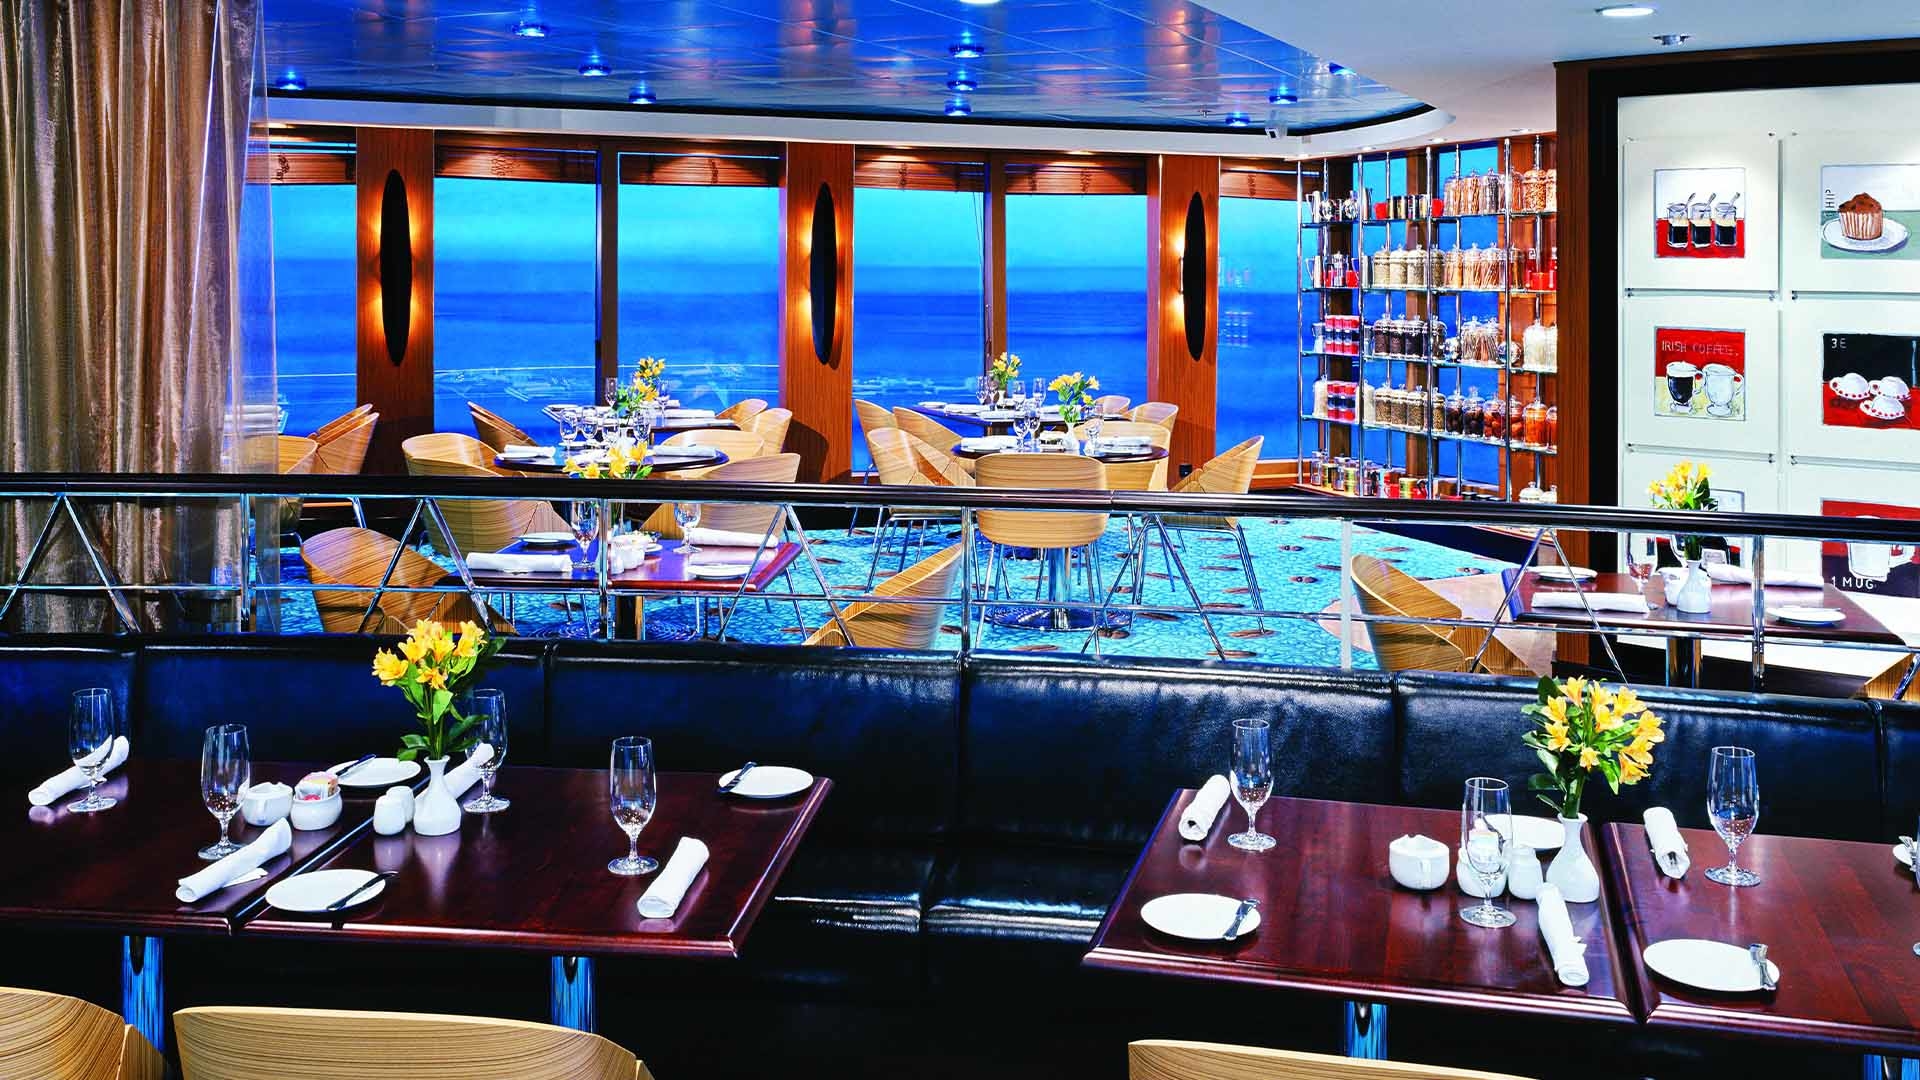 NCL Jewel Blue Lagoon Restaurant